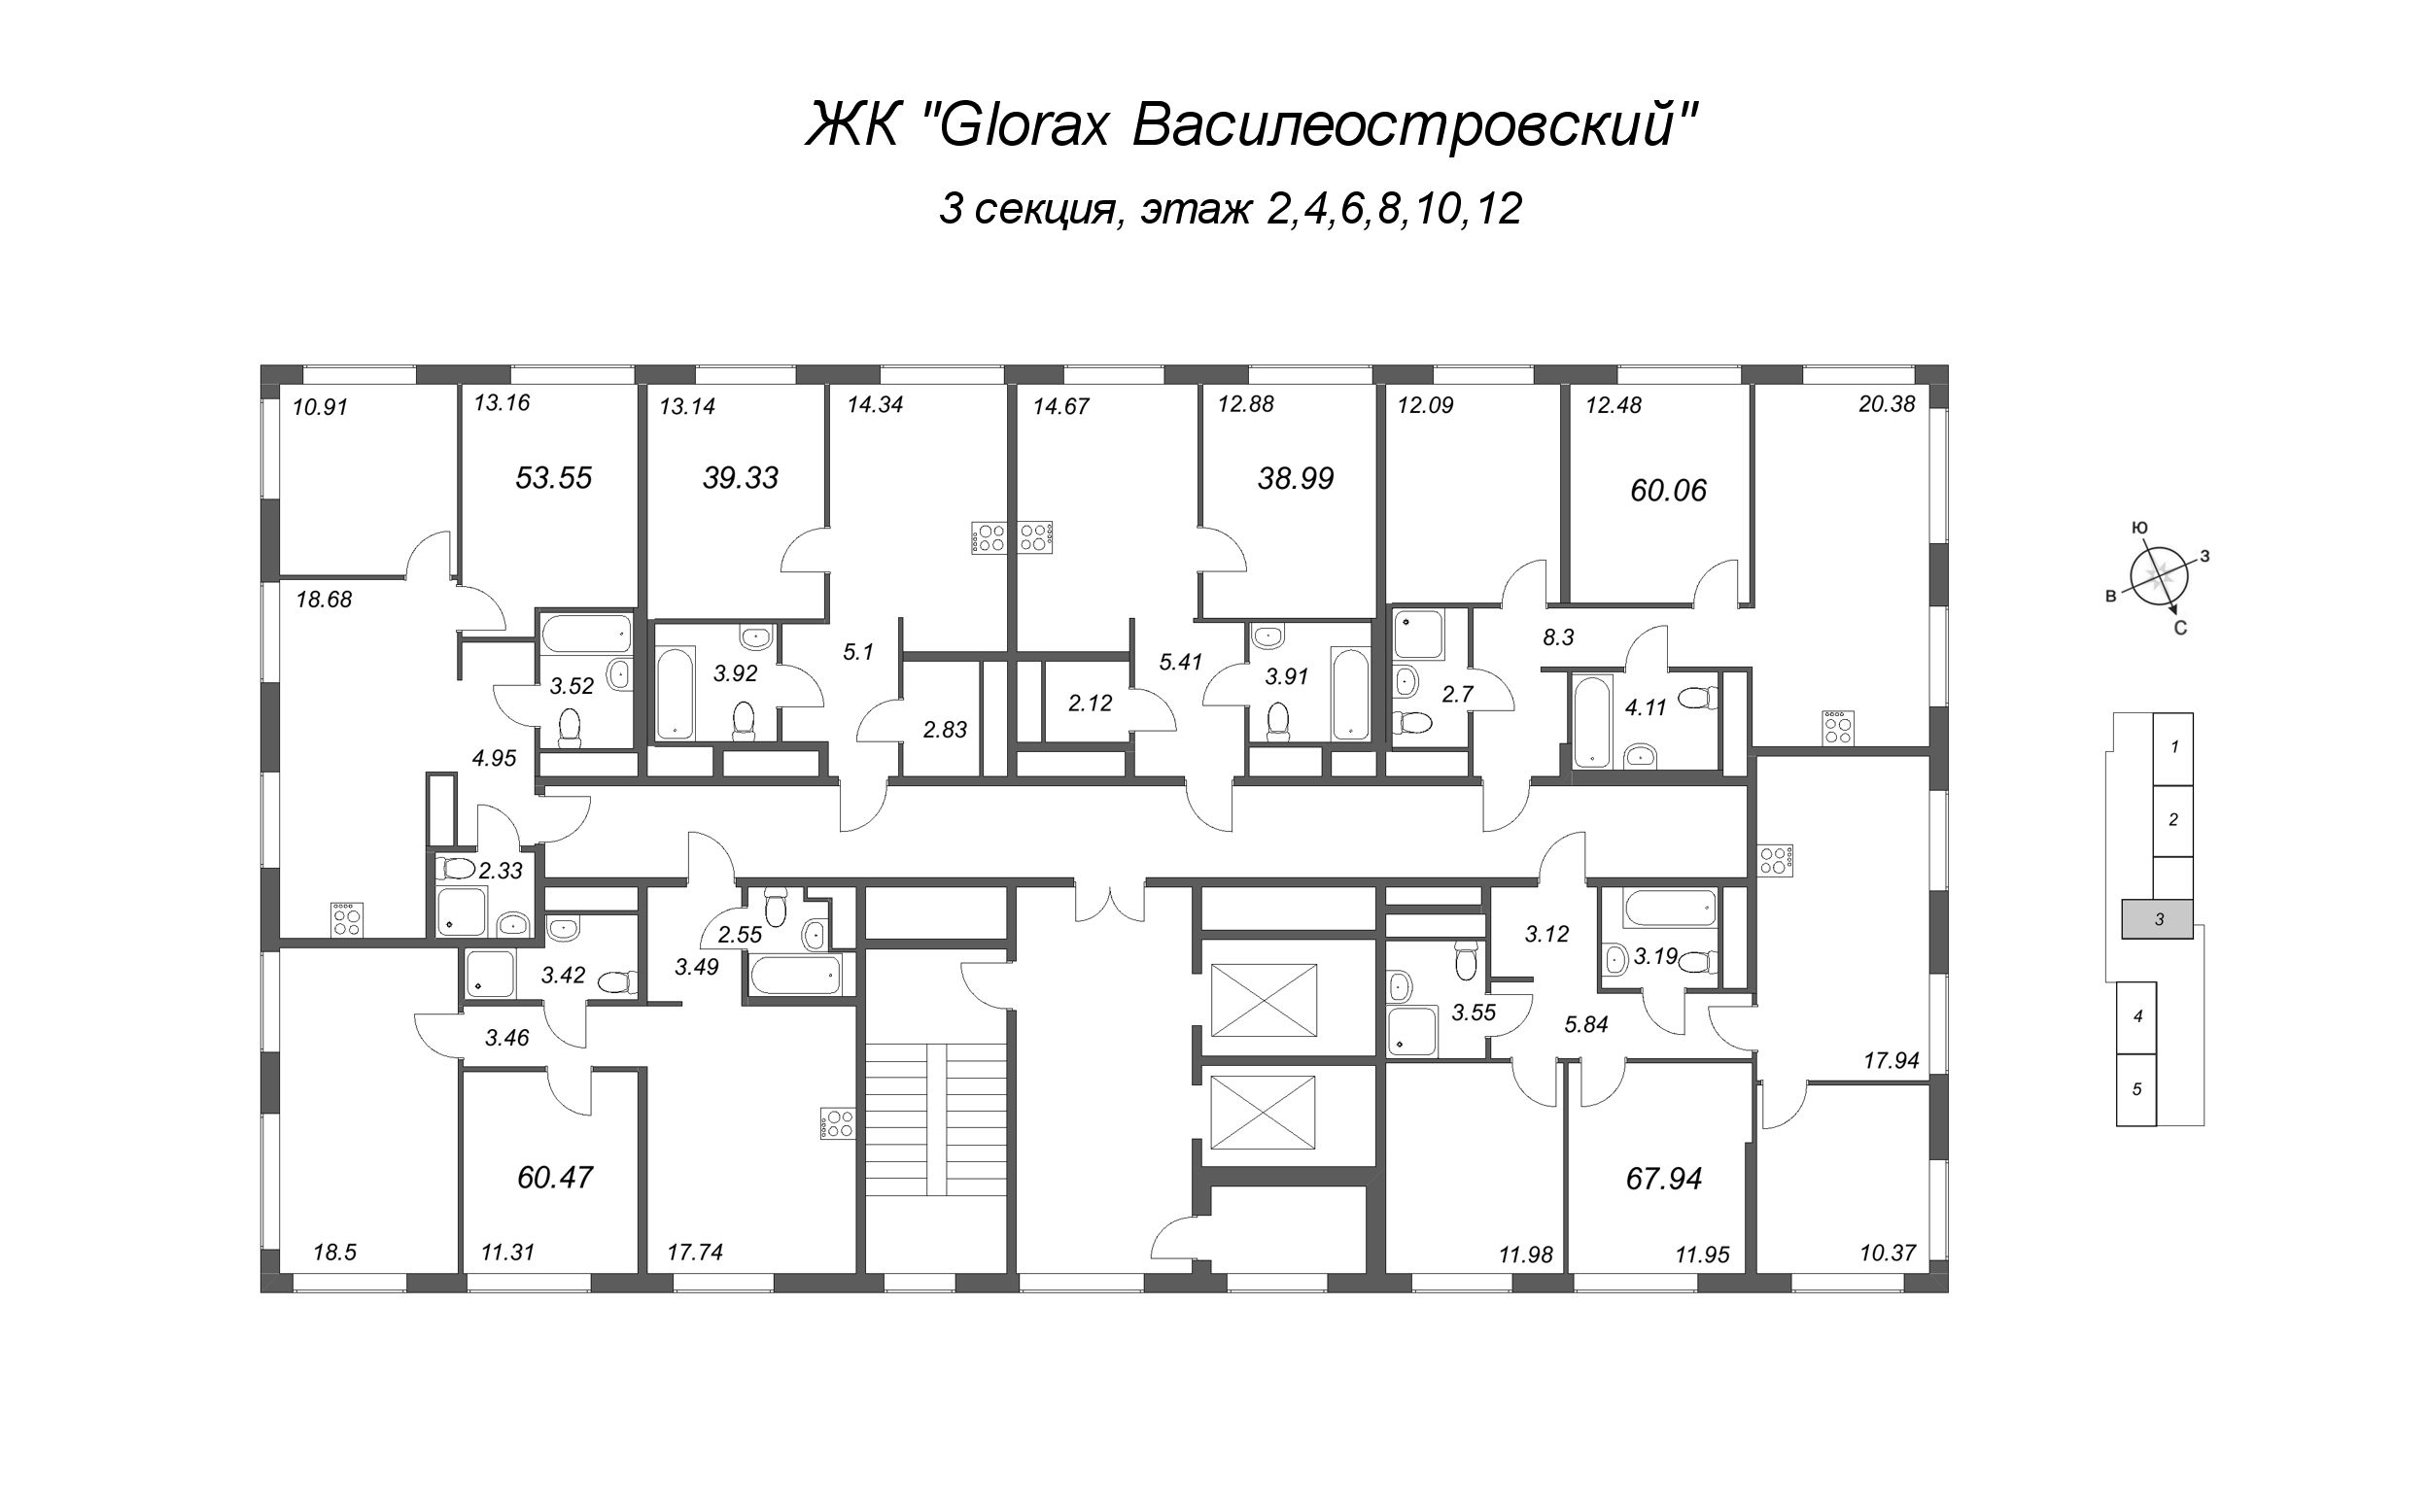 3-комнатная (Евро) квартира, 53.55 м² - планировка этажа